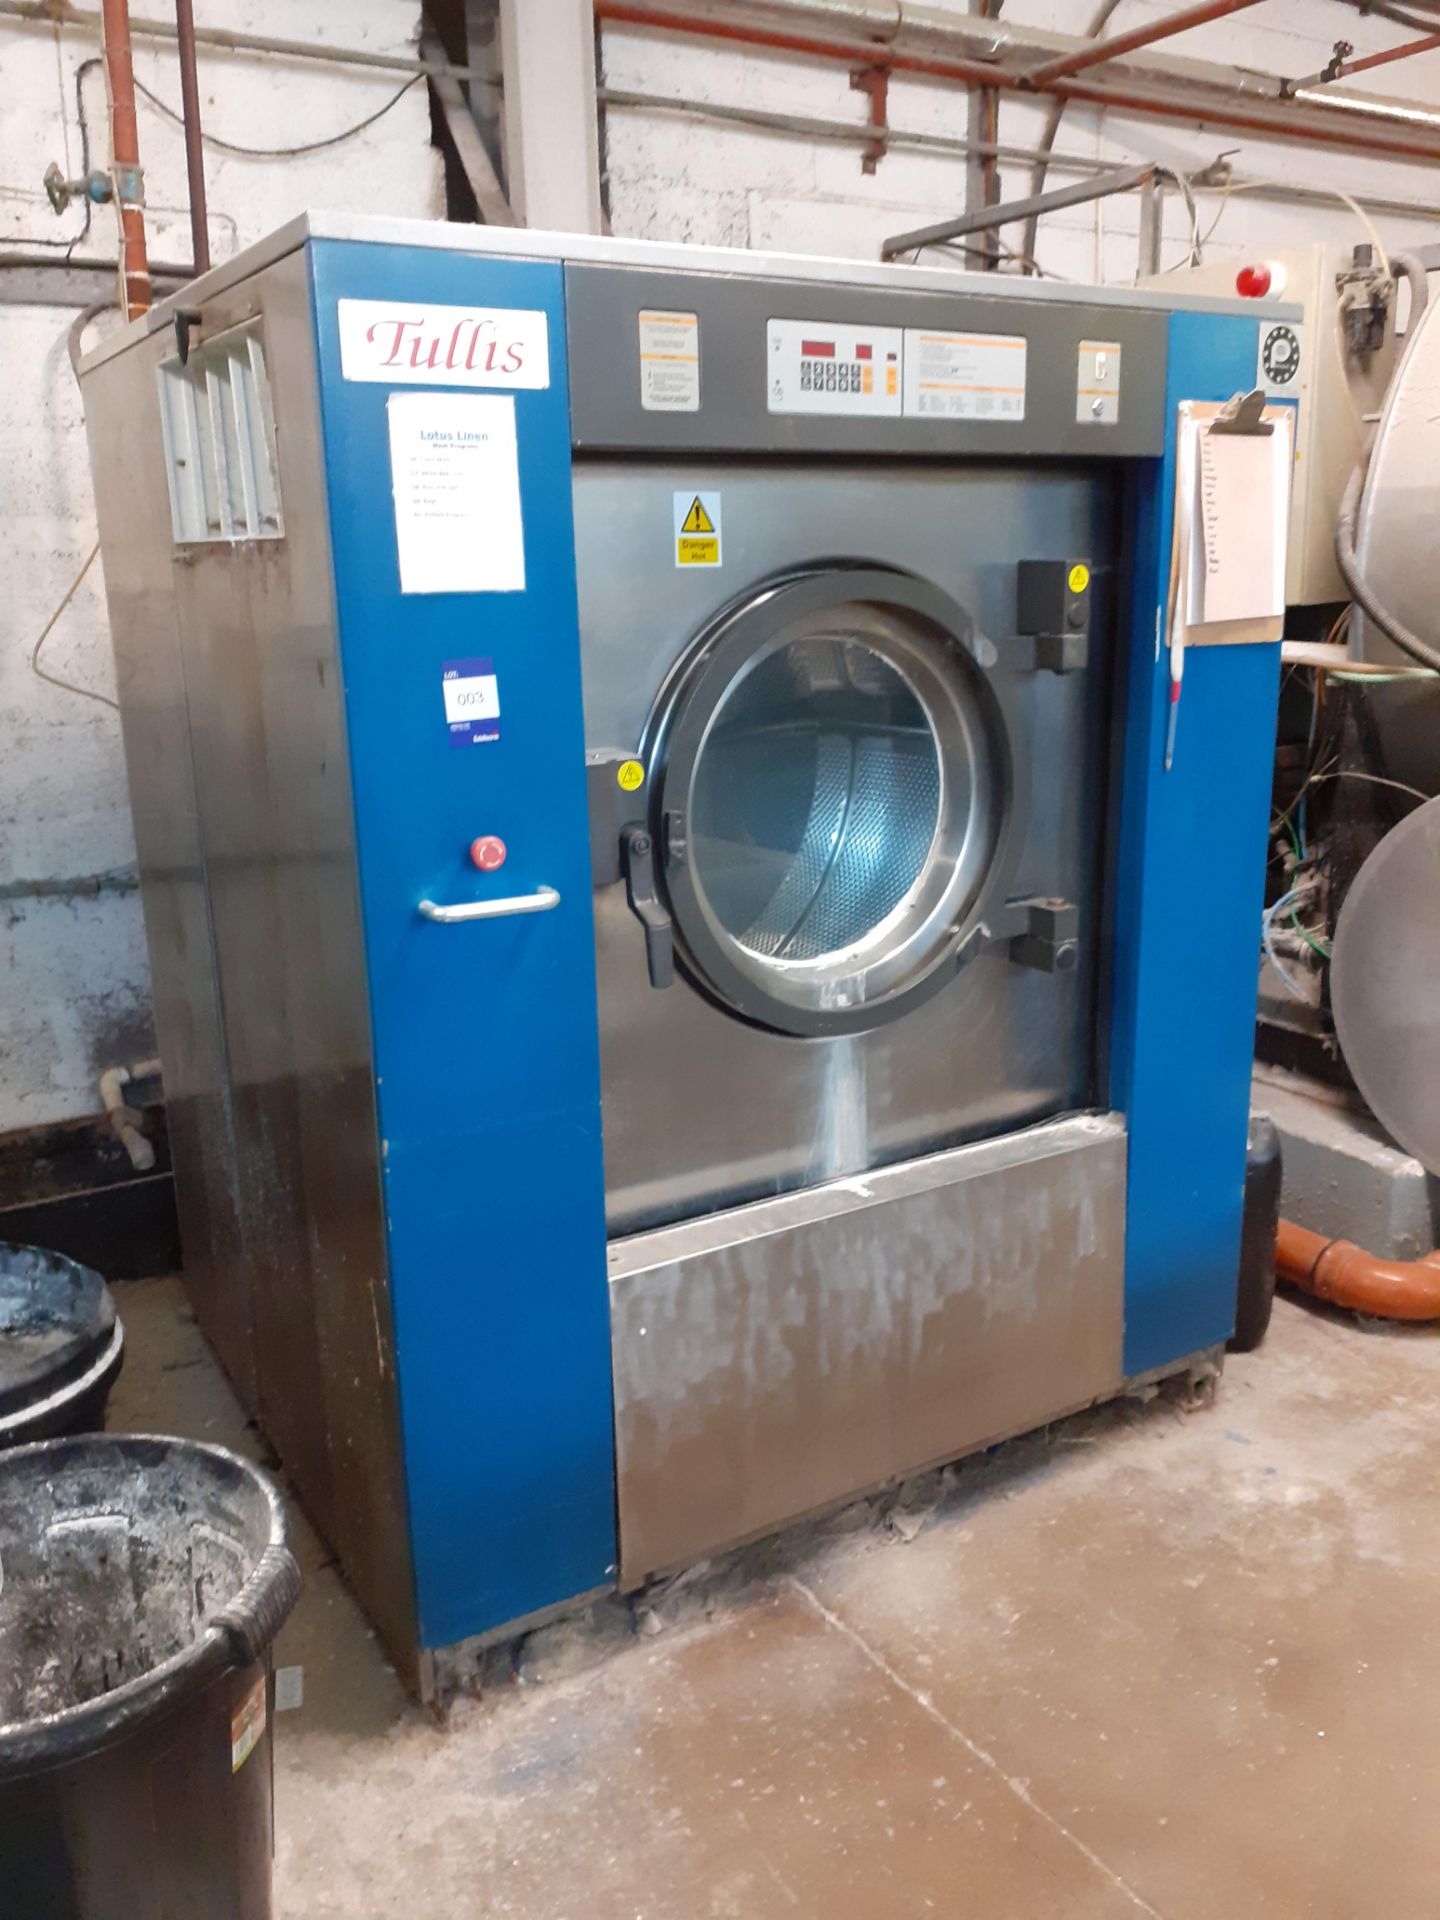 Tullis 50Kg Commercial Washing Machine, 415V (Disc